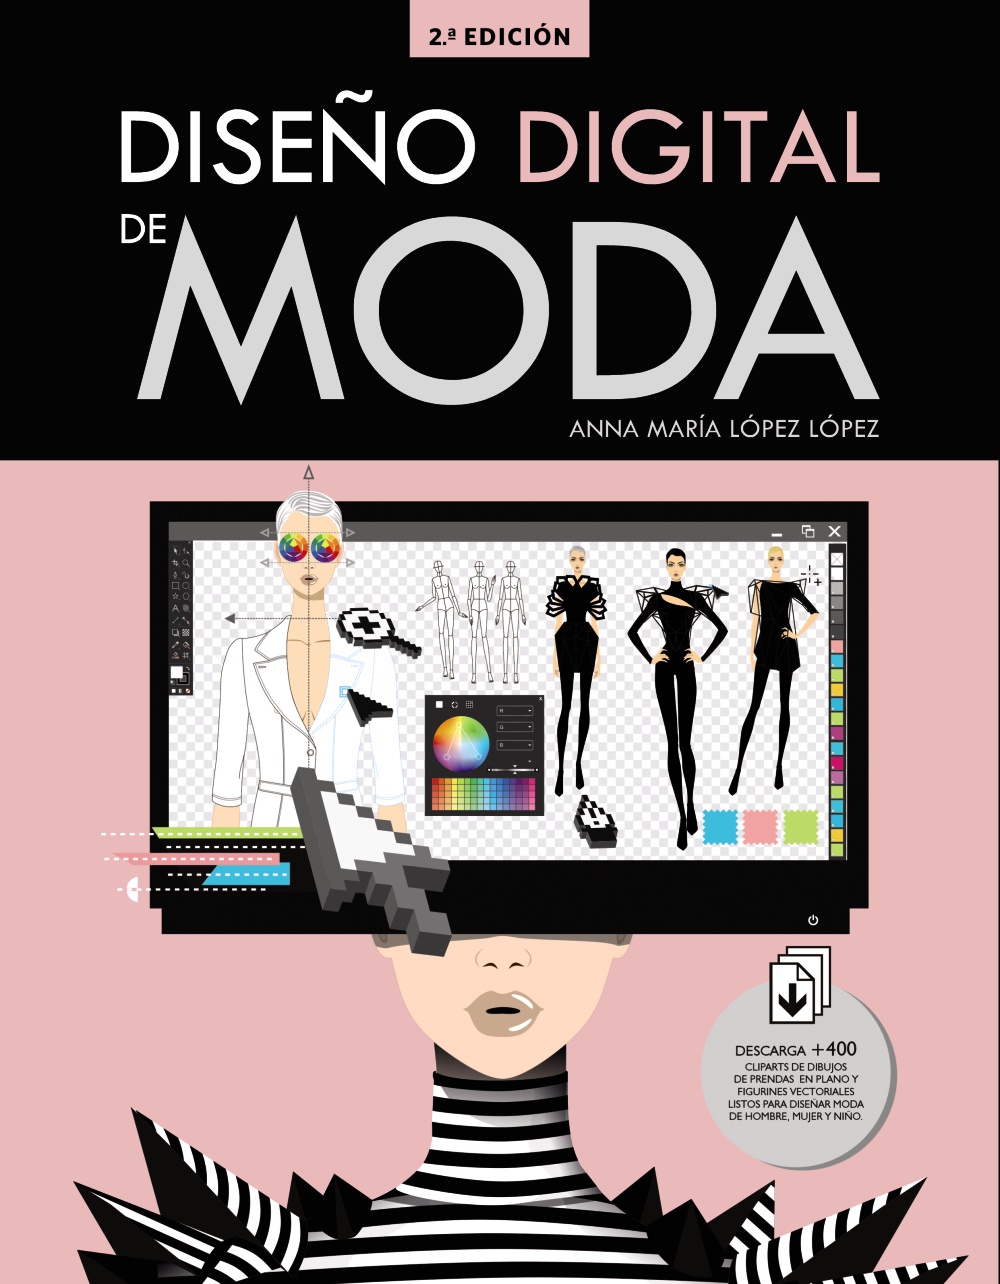 Diseño digital de moda - Anaya Multimedia